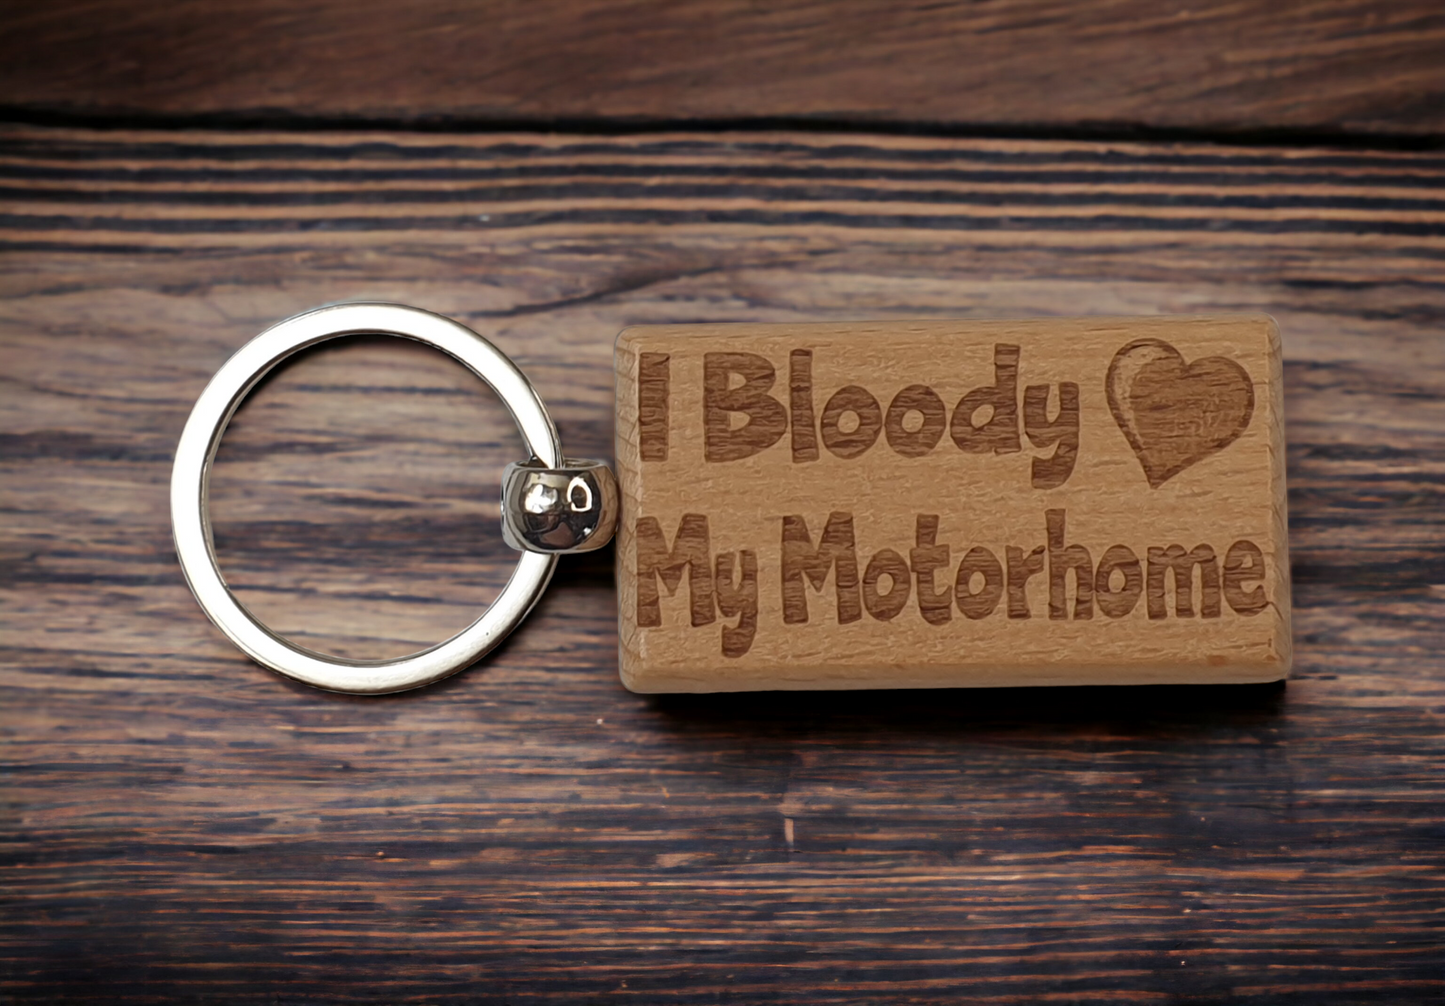 Motorhome Keyring Gift - I Bloody Love My Motorhome - Nice Cute Engraved Wooden Key Fob Fun Present